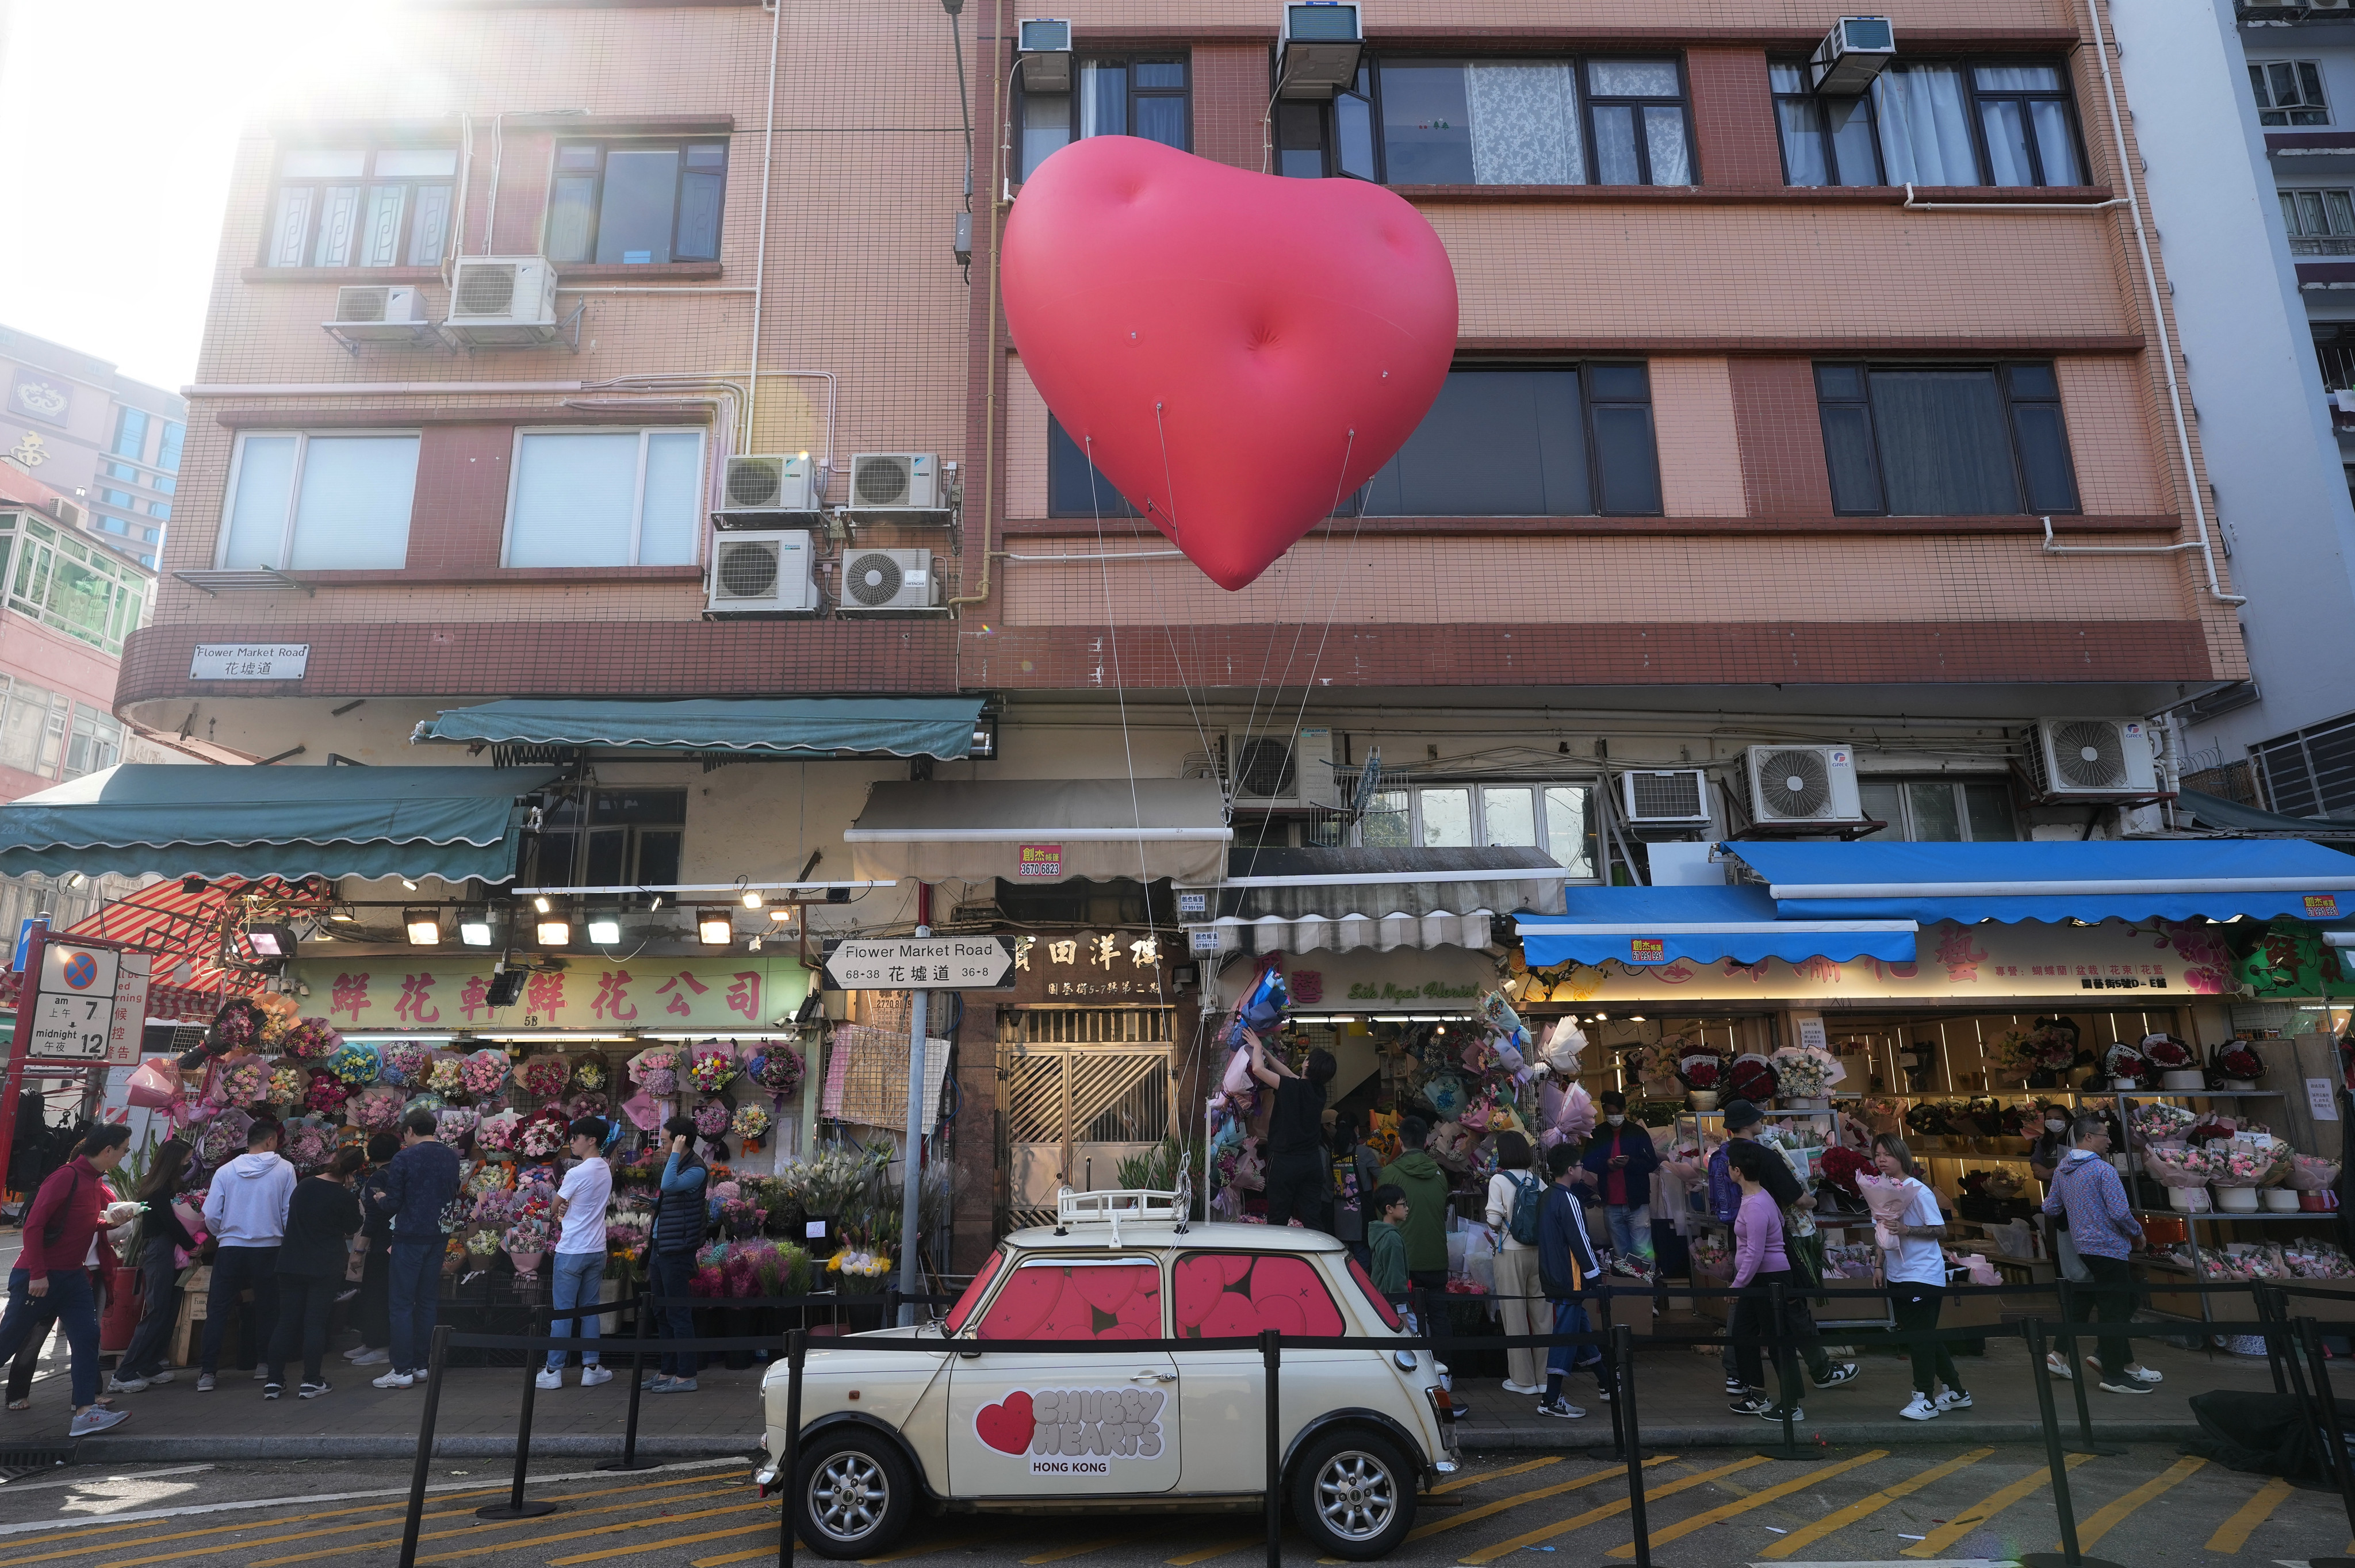 A “Chubby Heart” floats in Hong Kong’s Mong Kok district on February 14. Photo: Elson Li